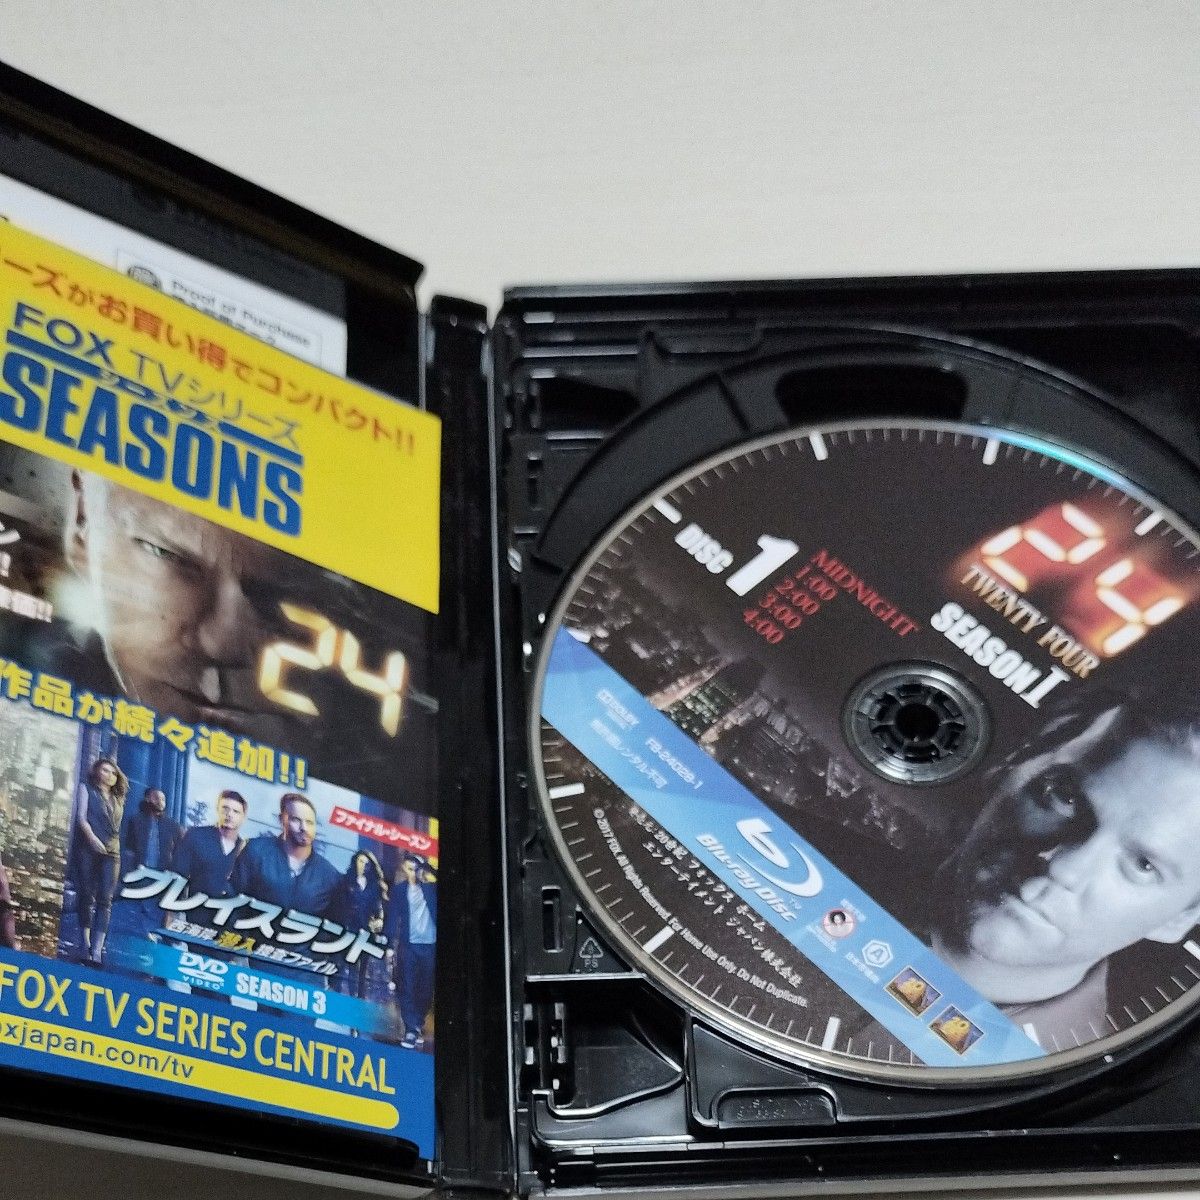  24 -TWENTY FOUR- シーズン1 (SEASONSブルーレイボックス) Blu-ray 